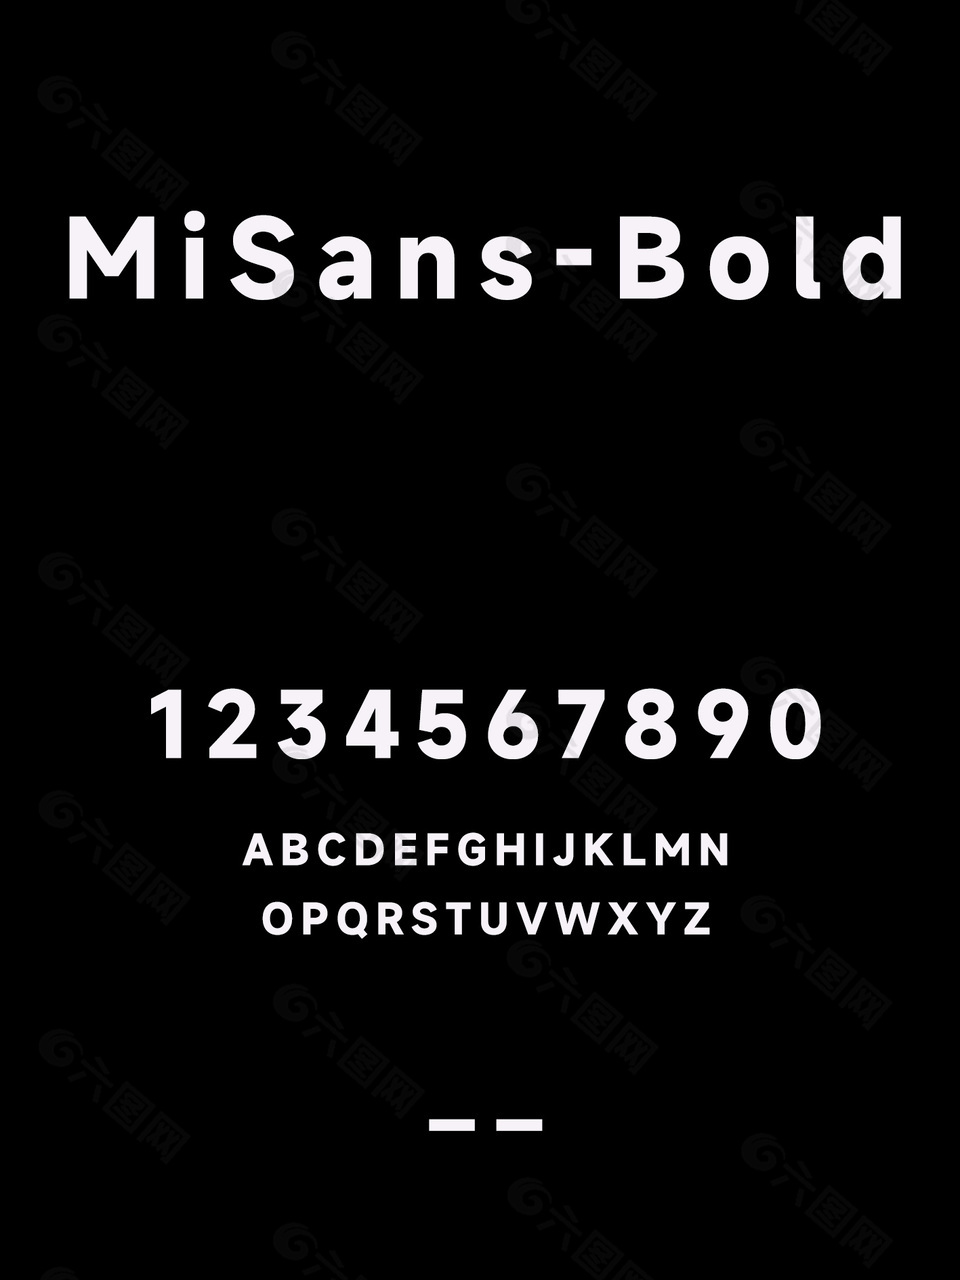 MiSans-Bold字体包